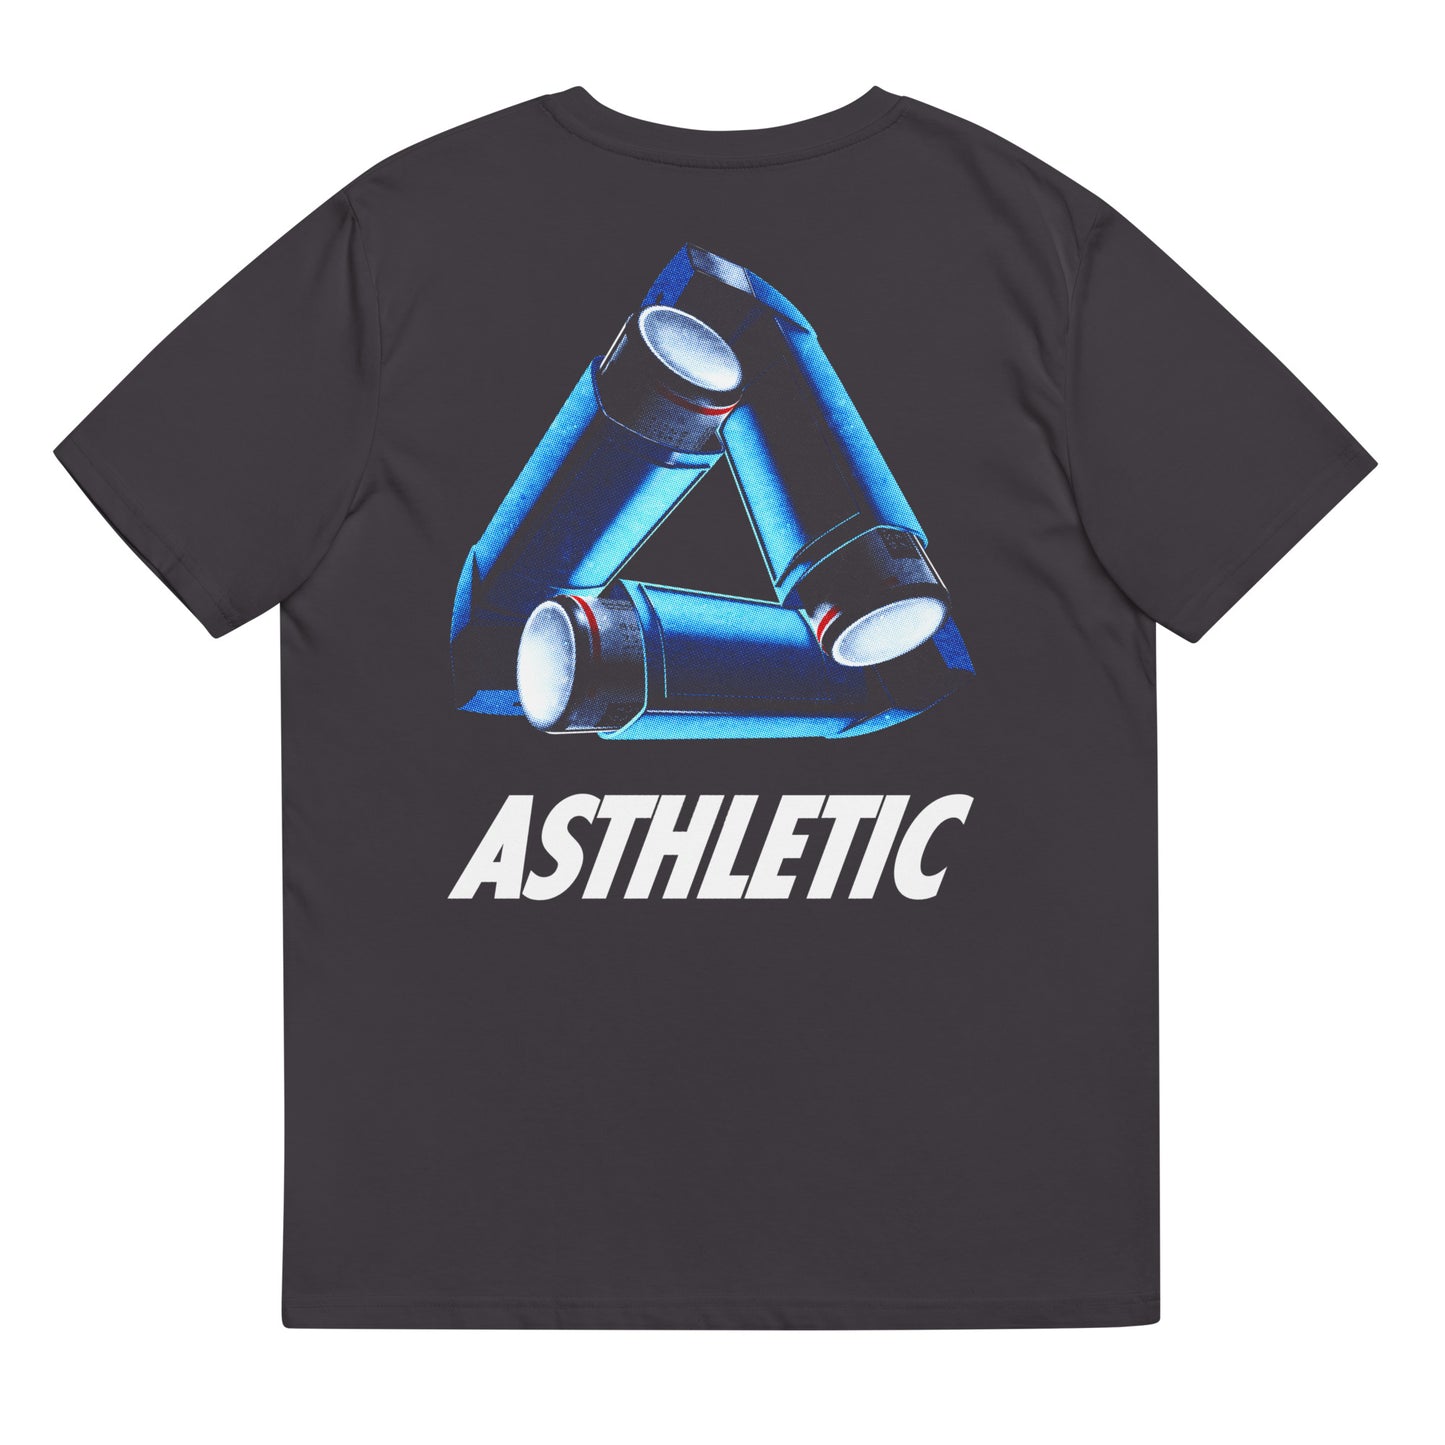 ASTHLETIC - Tee